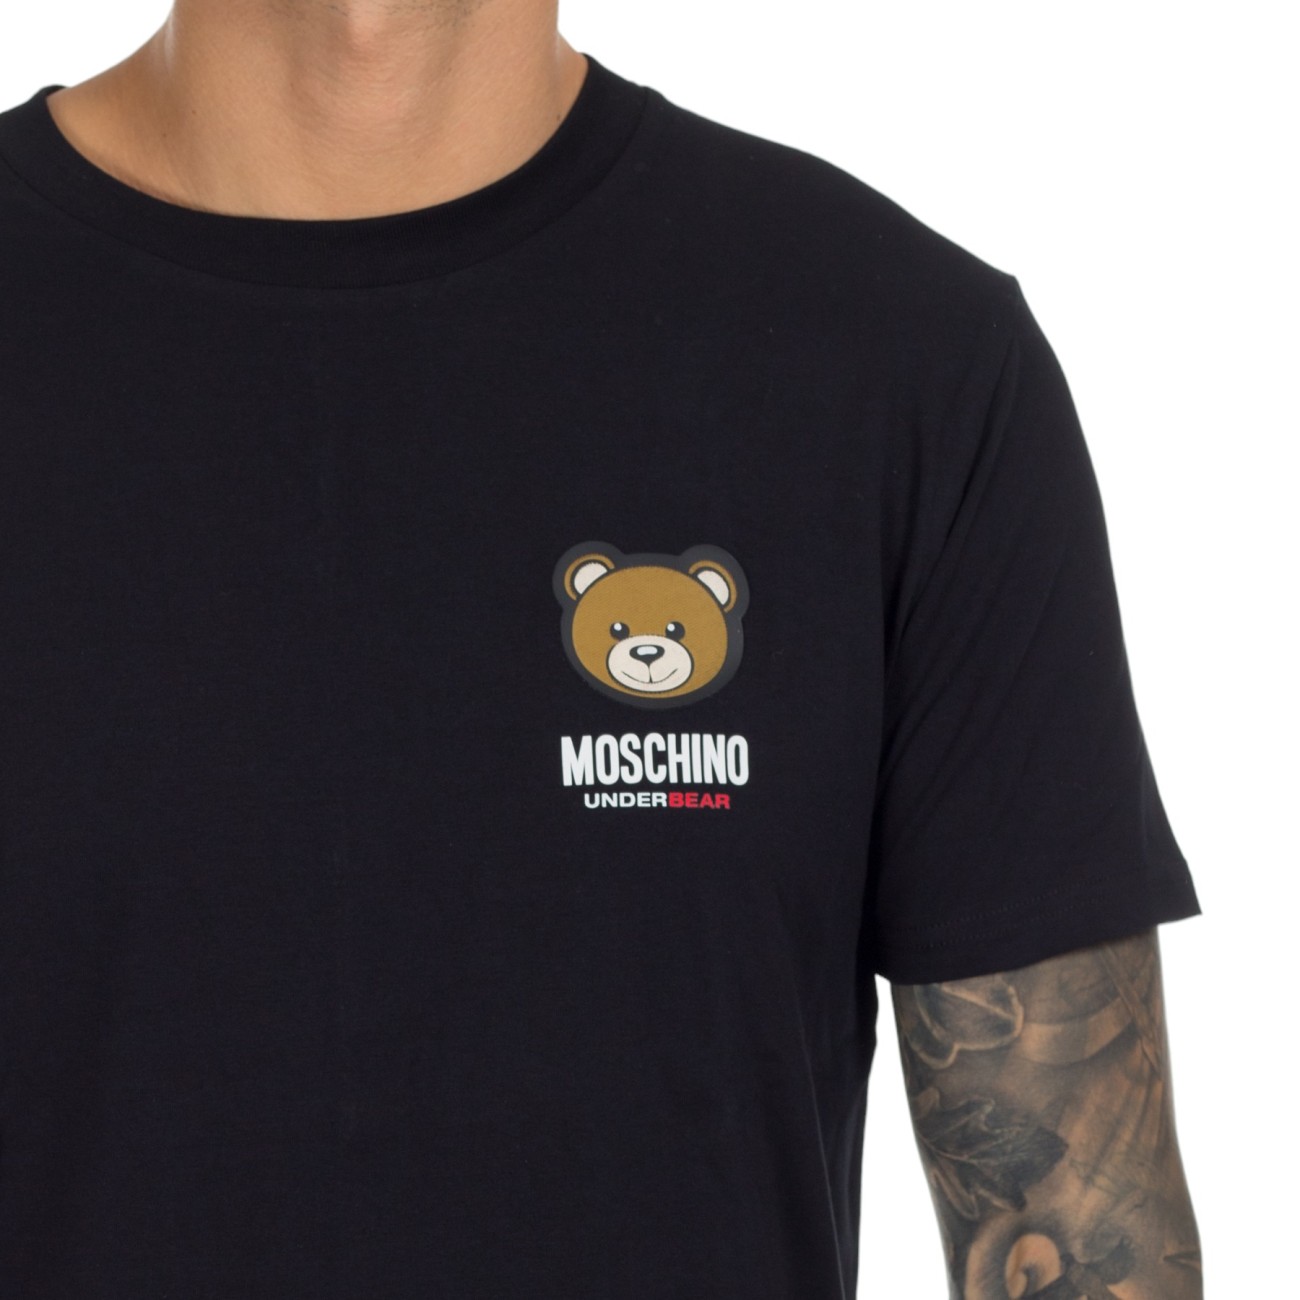 Moschino black t shirt bear